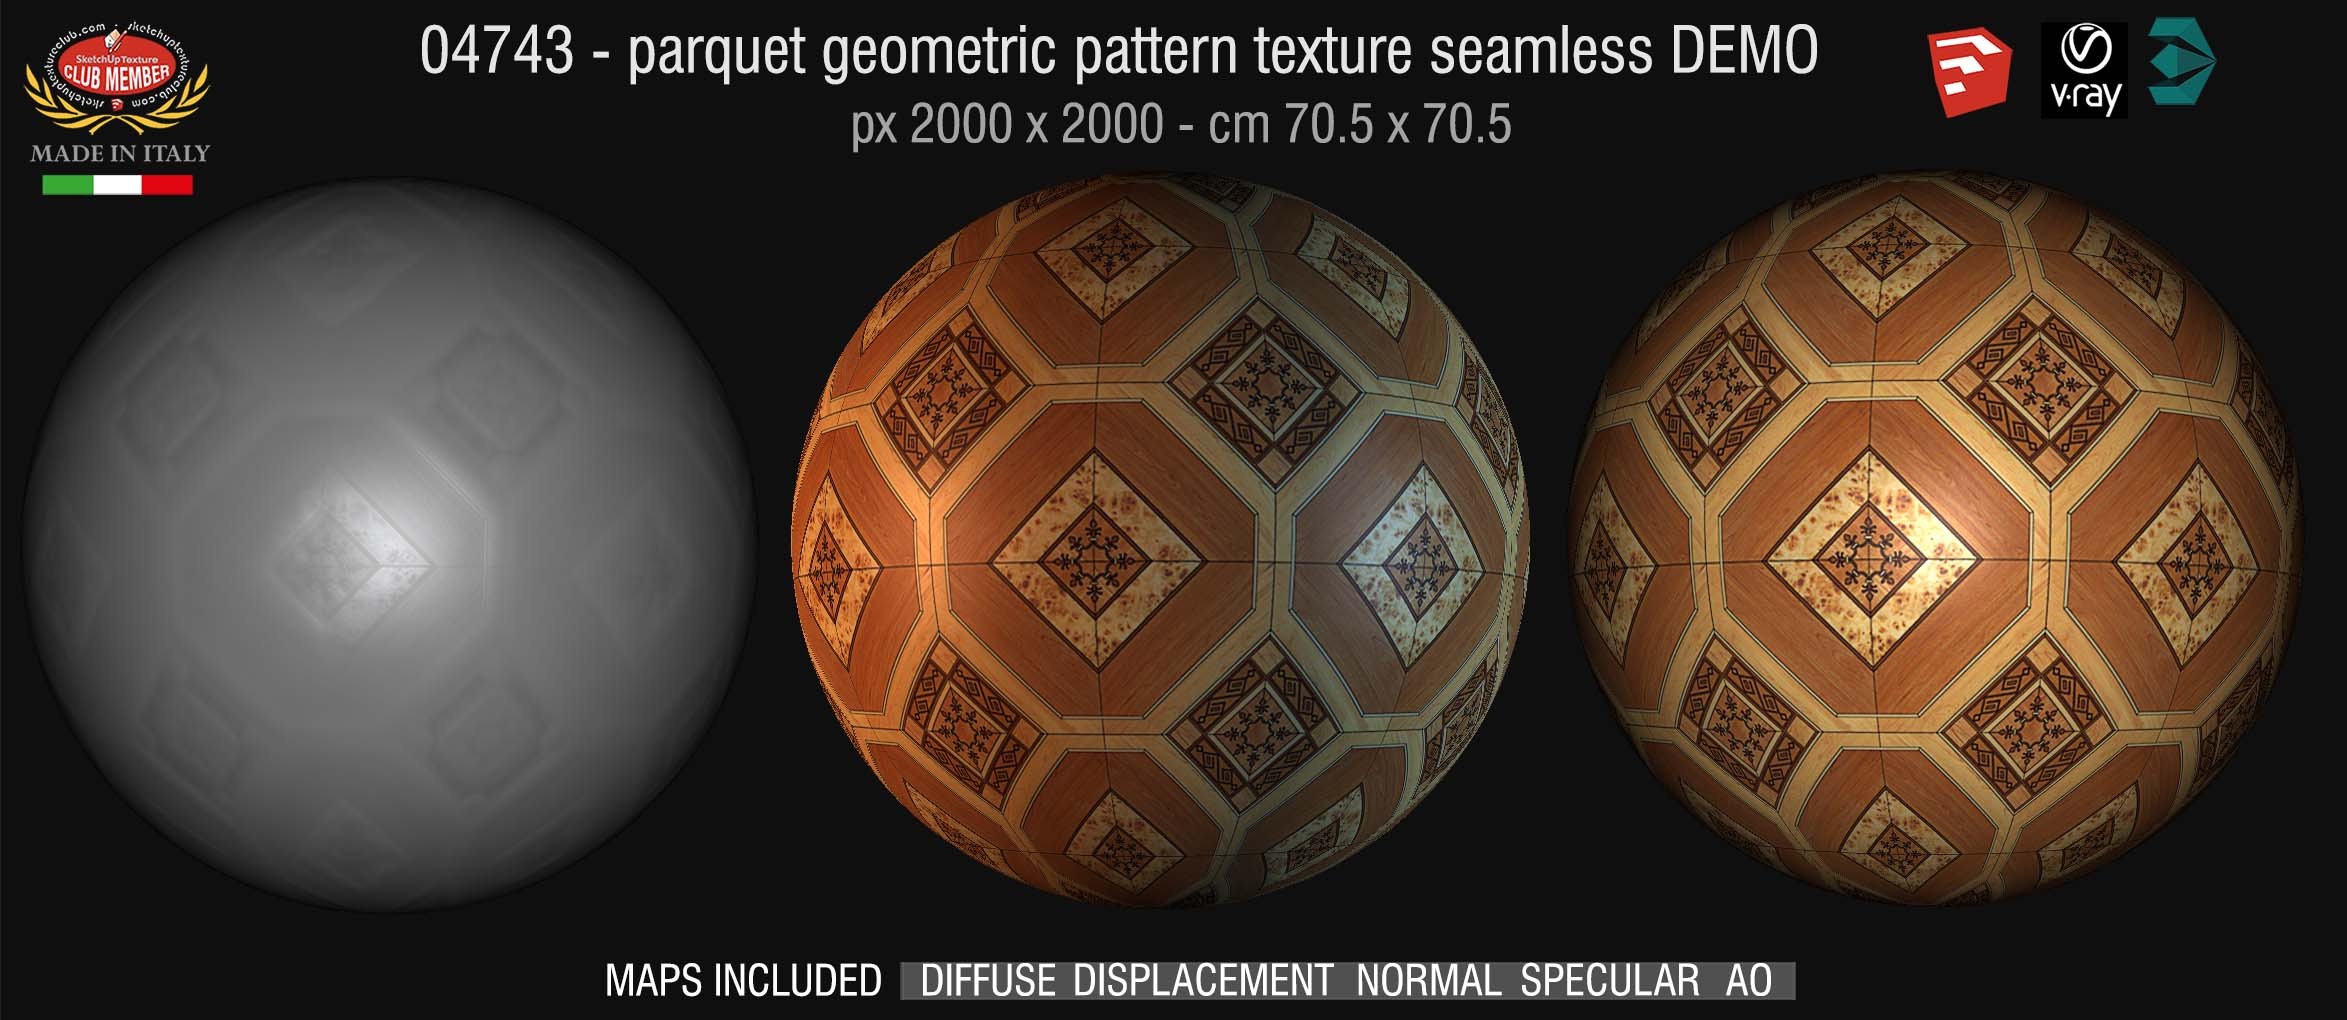 04743 HR Parquet geometric pattern texture seamless + maps DEMO